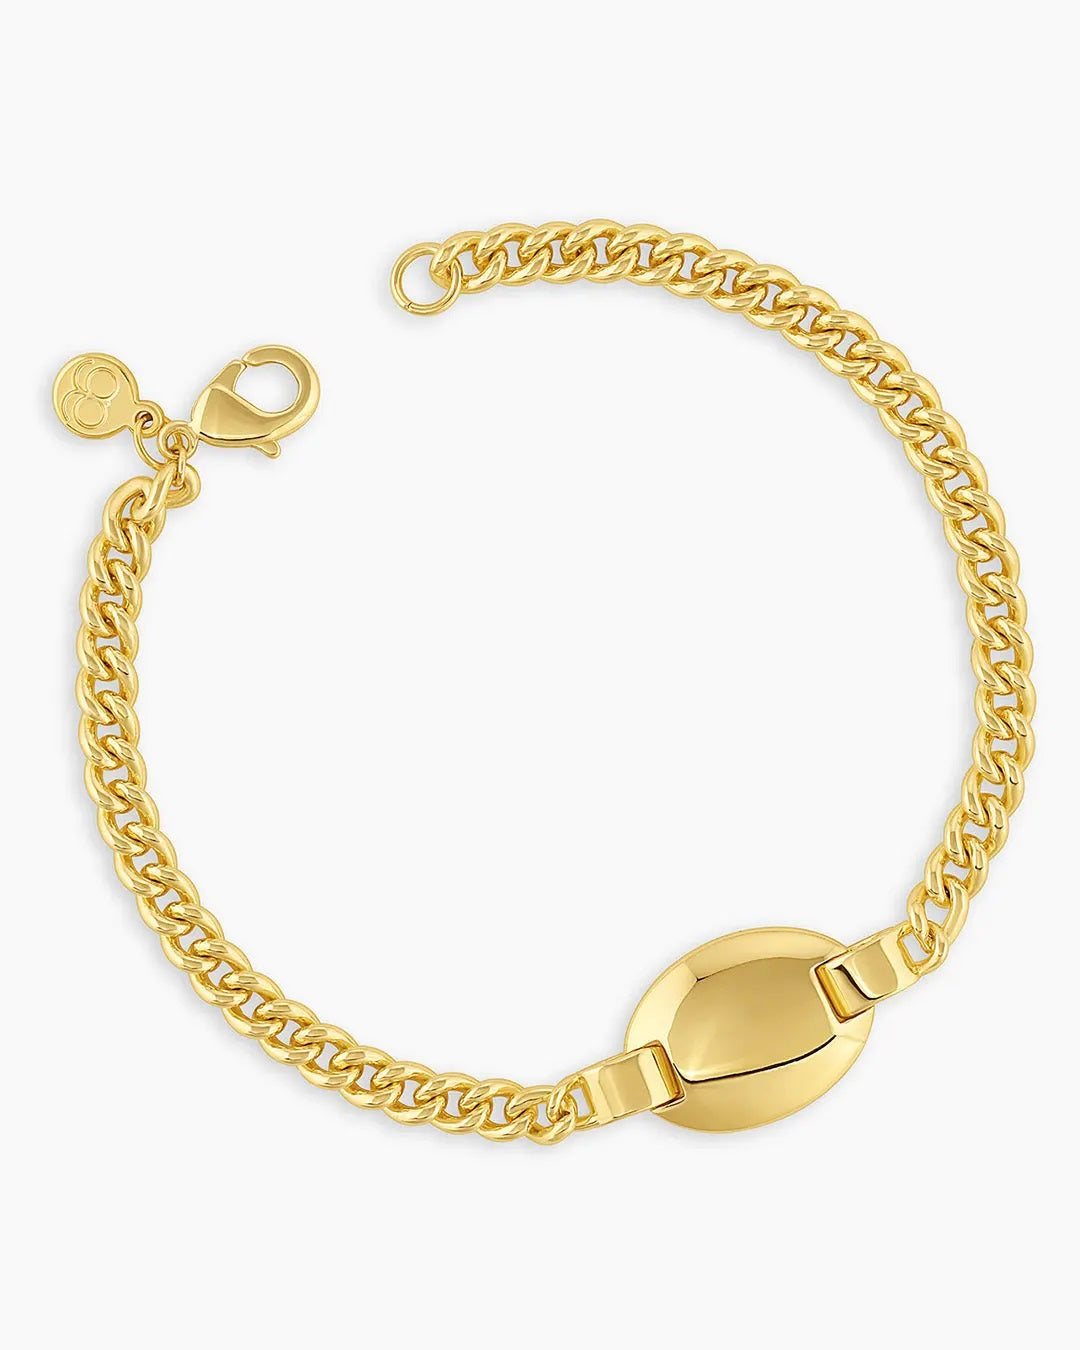 Gorjana Lou Tag Bracelet - Gold